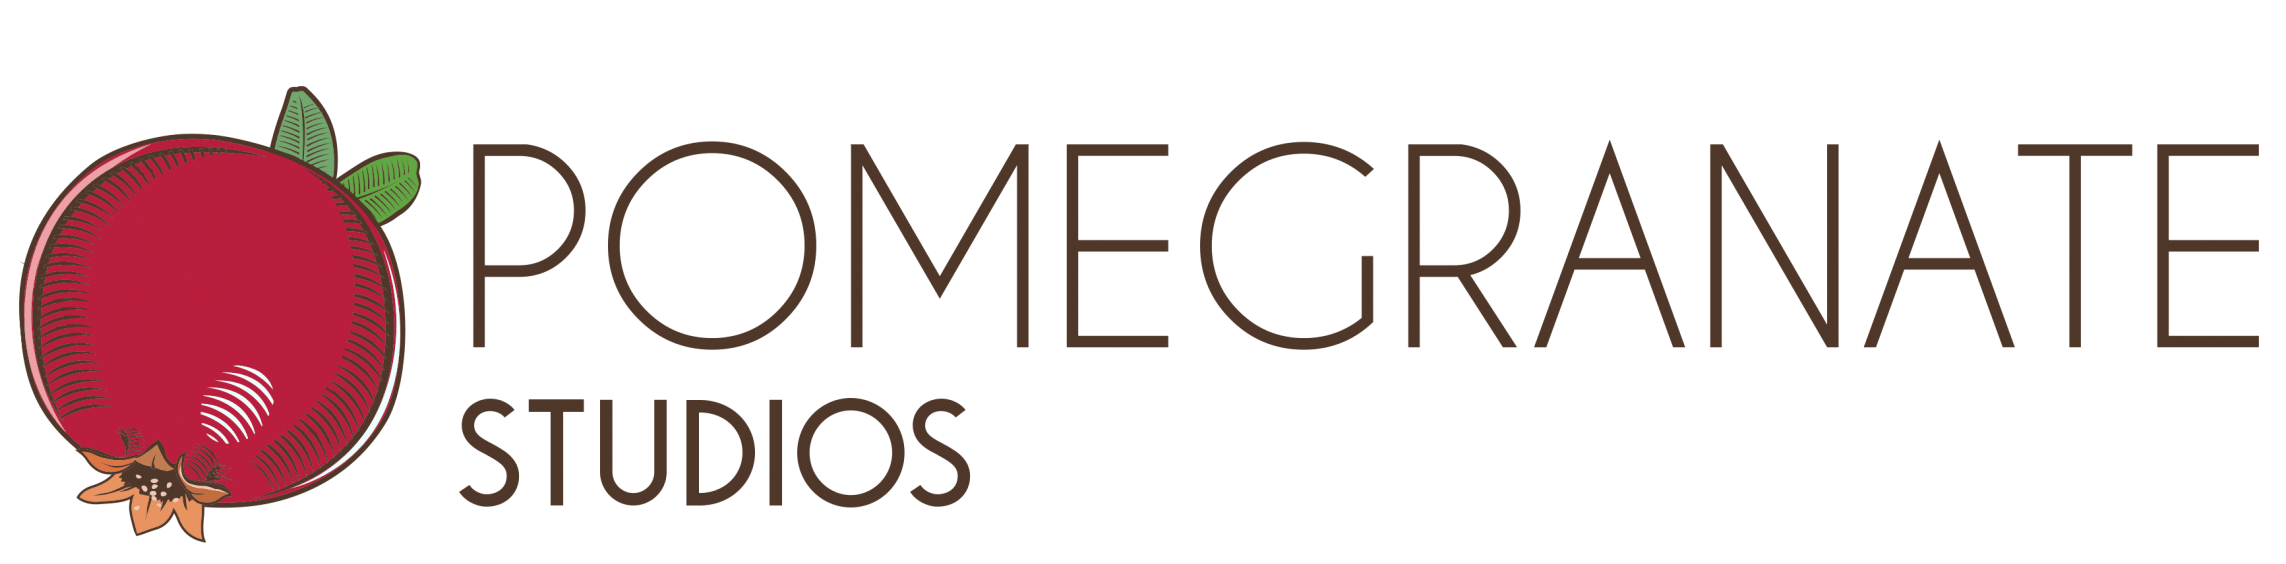 Pomegranate Studios Logo